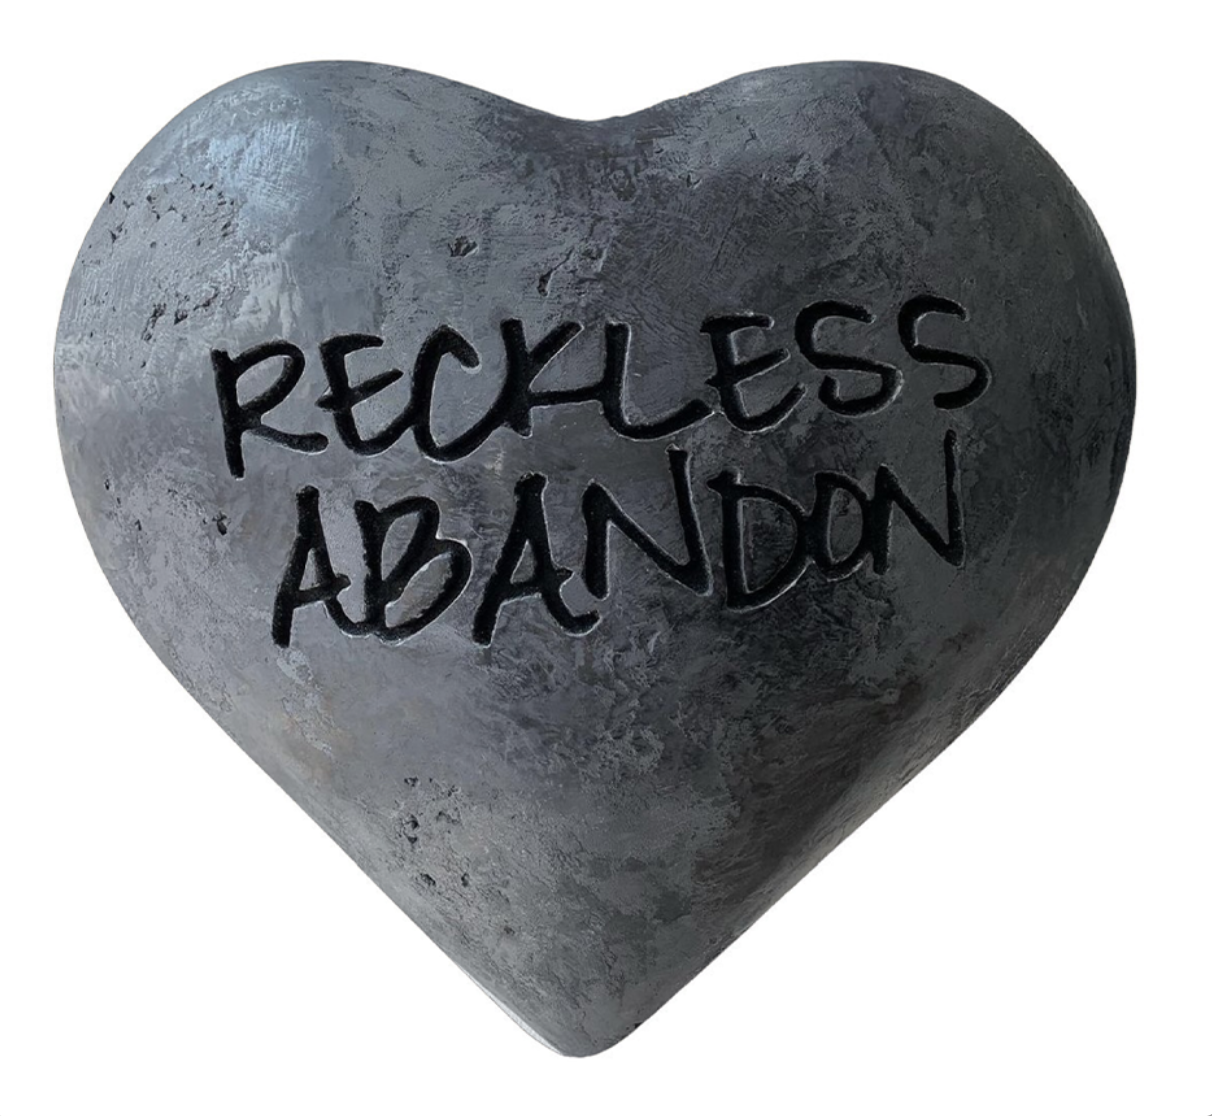 Reckless Abandon (charcoal)